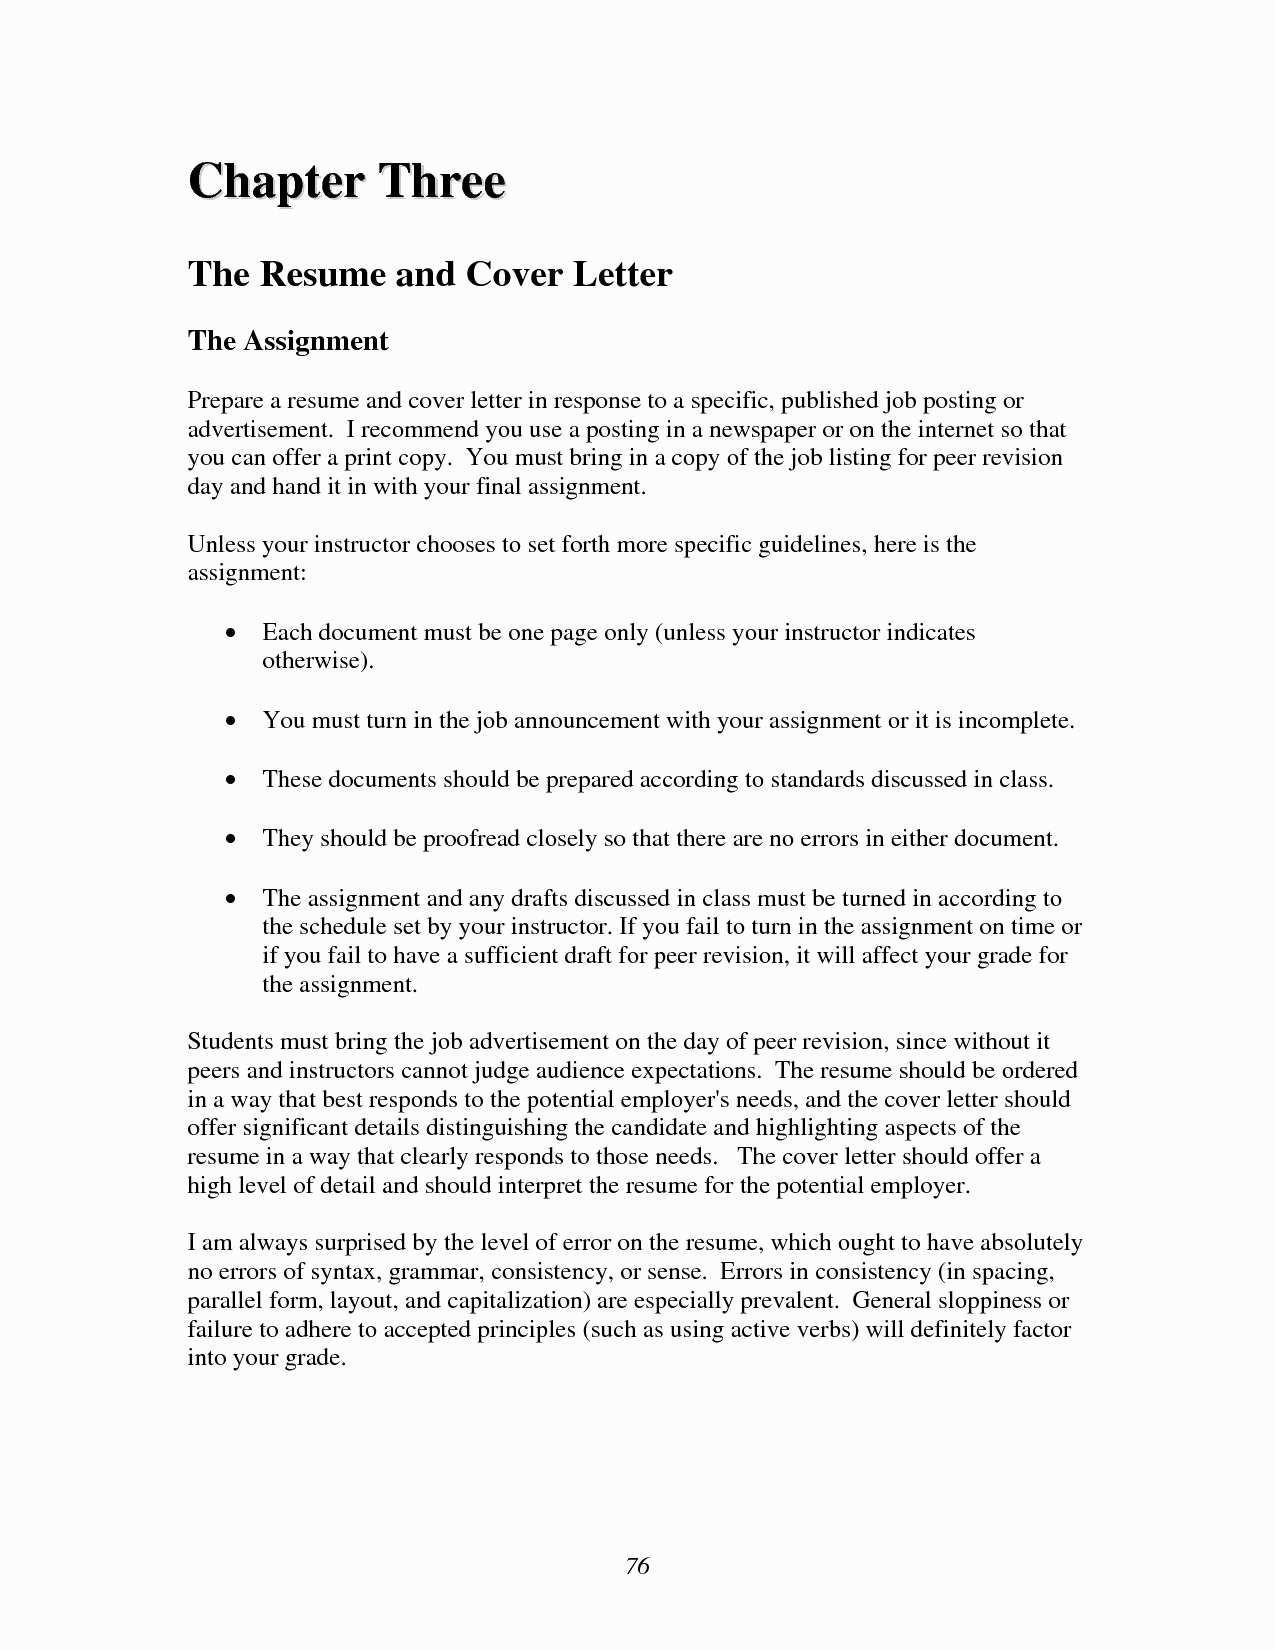 Company Cover Letter Template - Cover Letter Sample for Teaching Job New Job Fer Letter Template Us